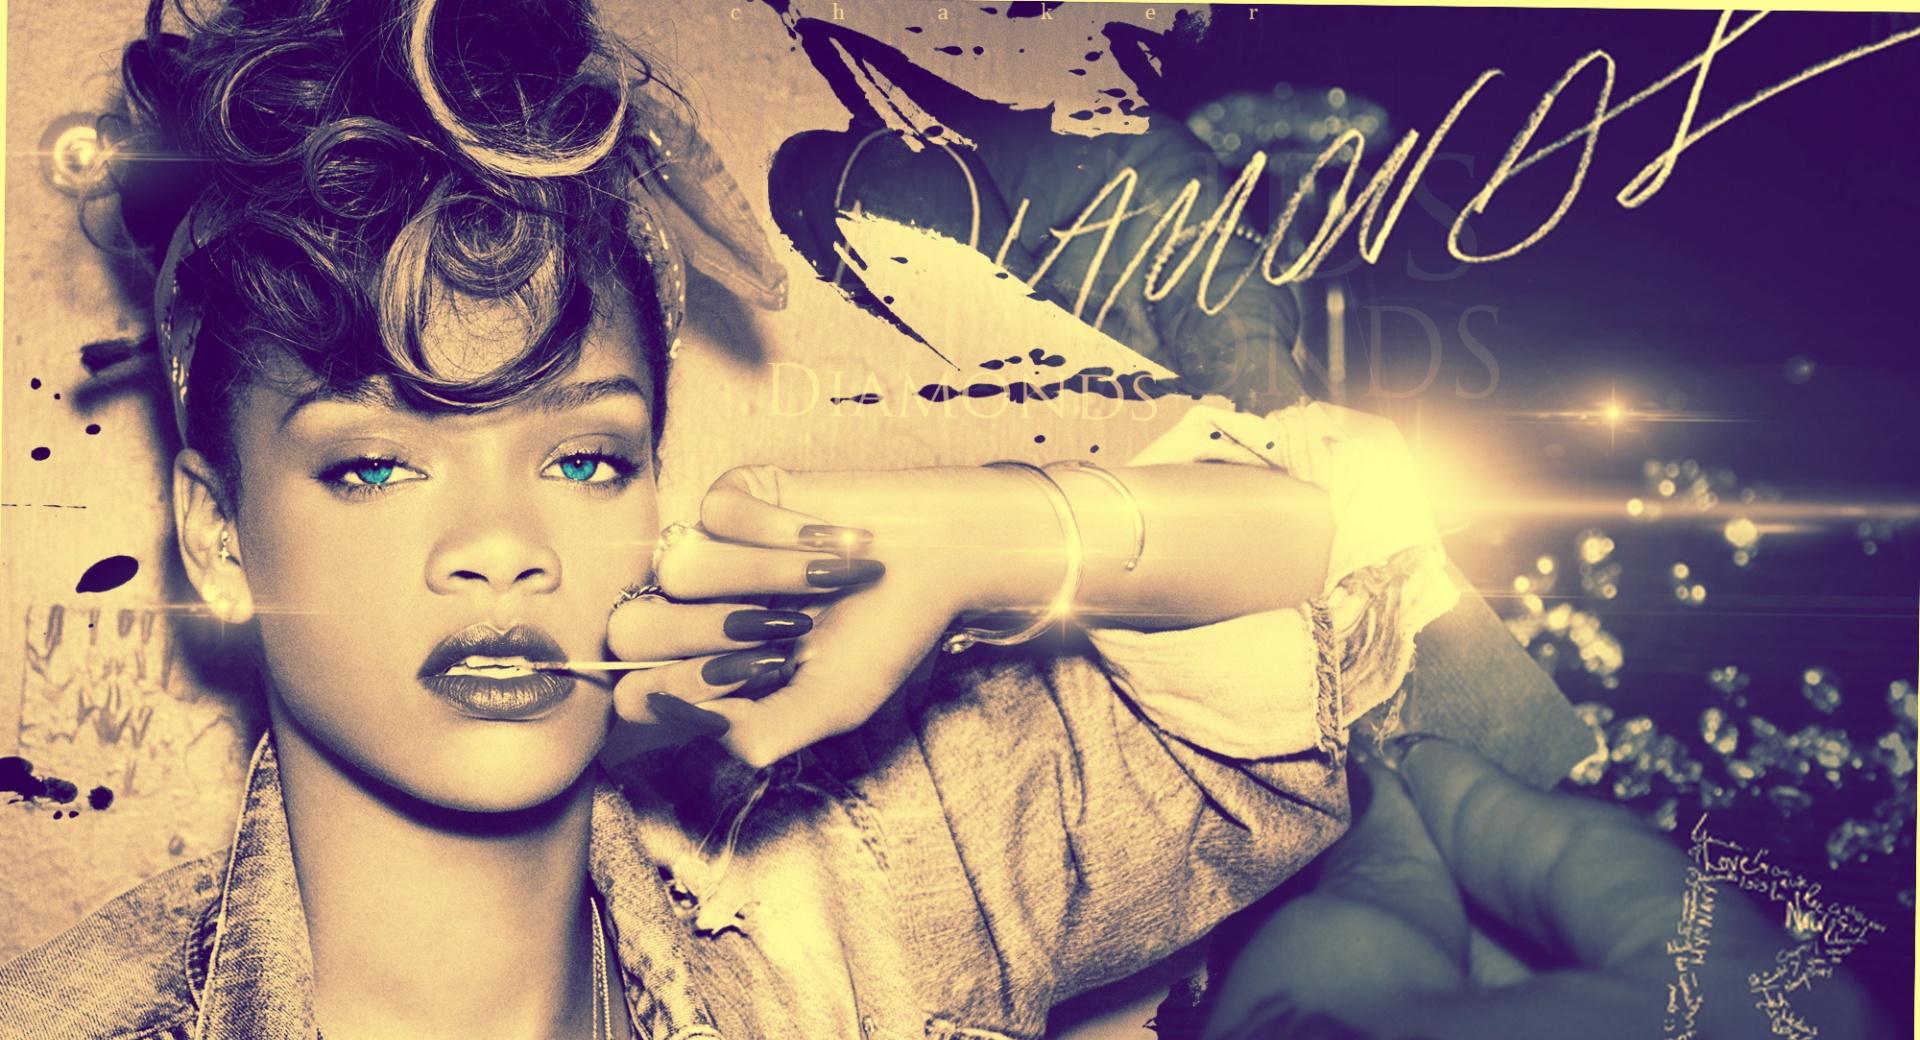 Rihanna-Diamonds at 1280 x 960 size wallpapers HD quality